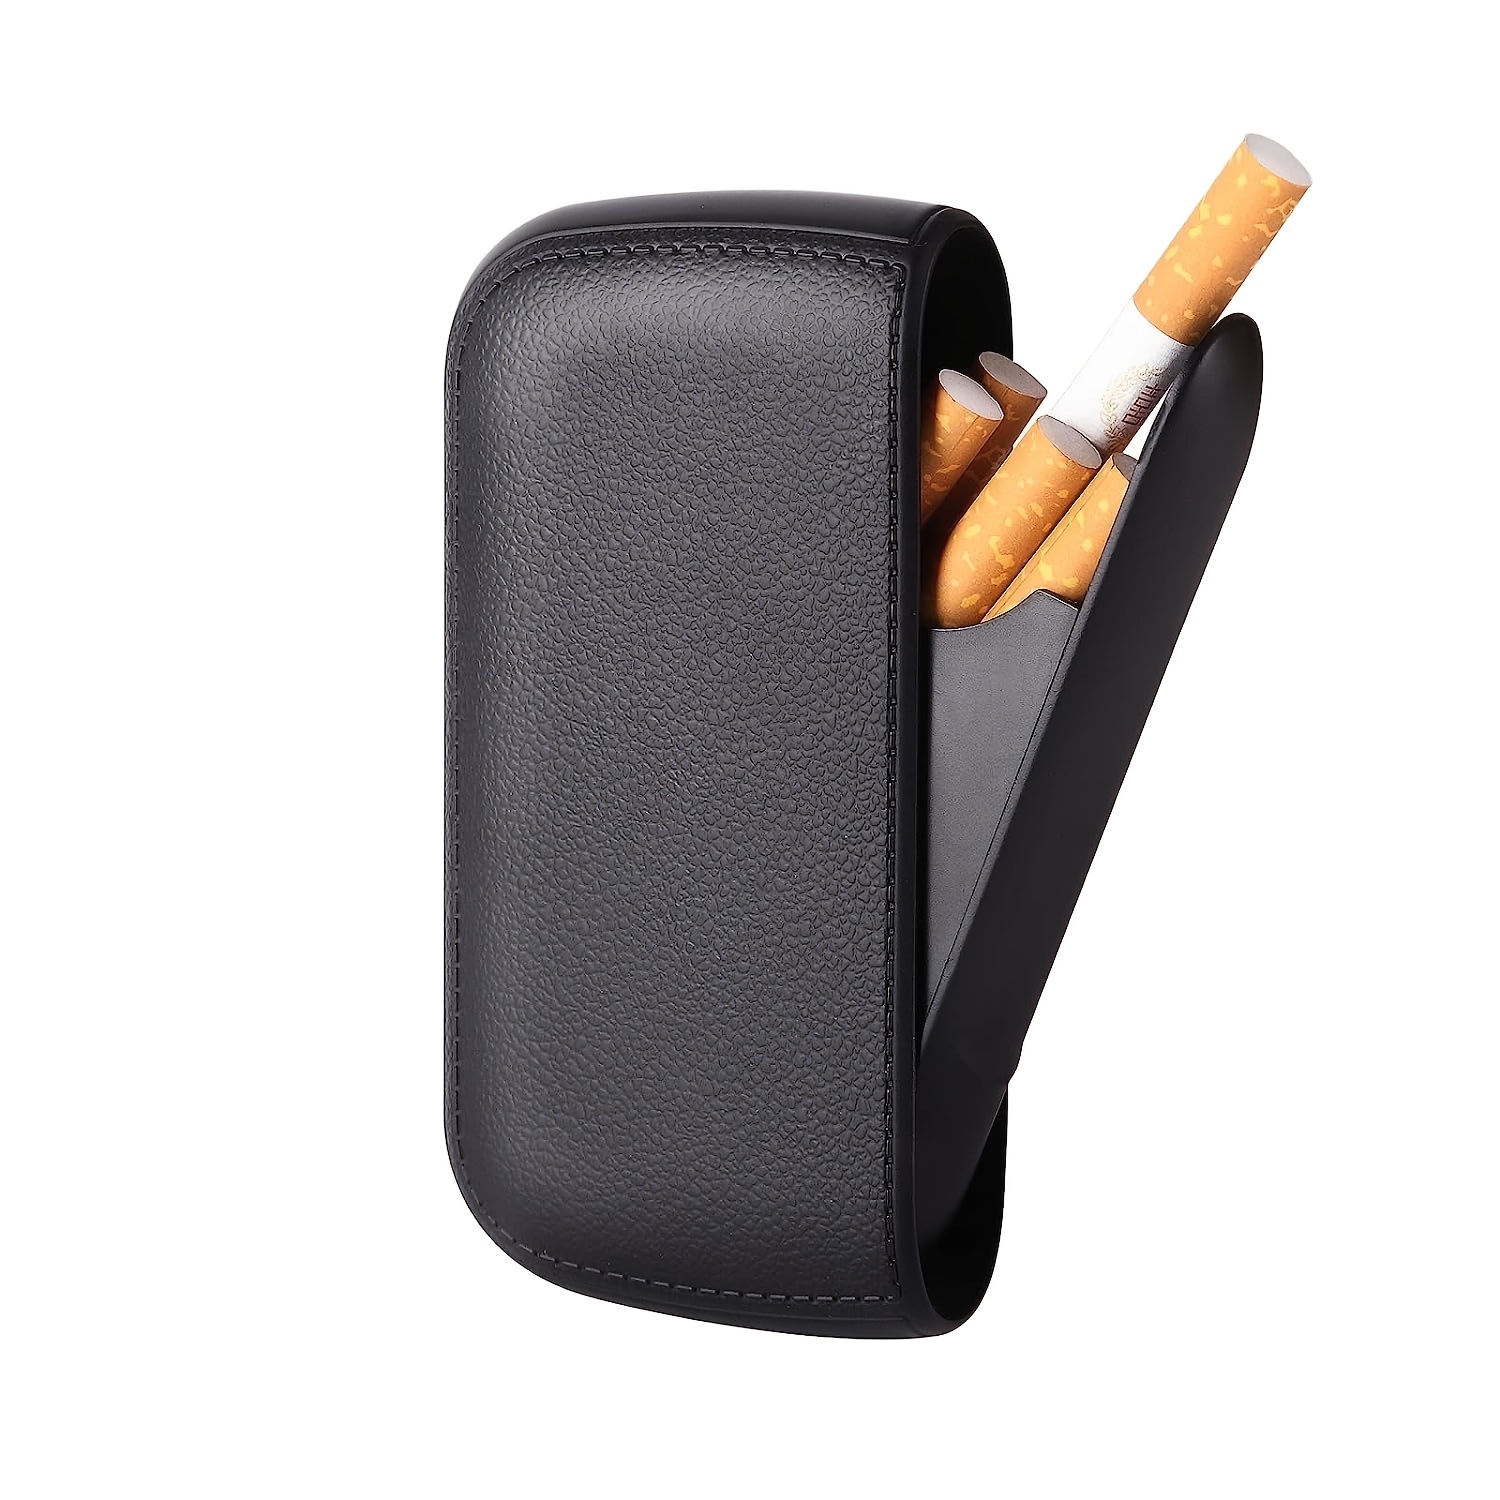 Men's High grade Cigarette Filter Holders Portable Washable - Temu